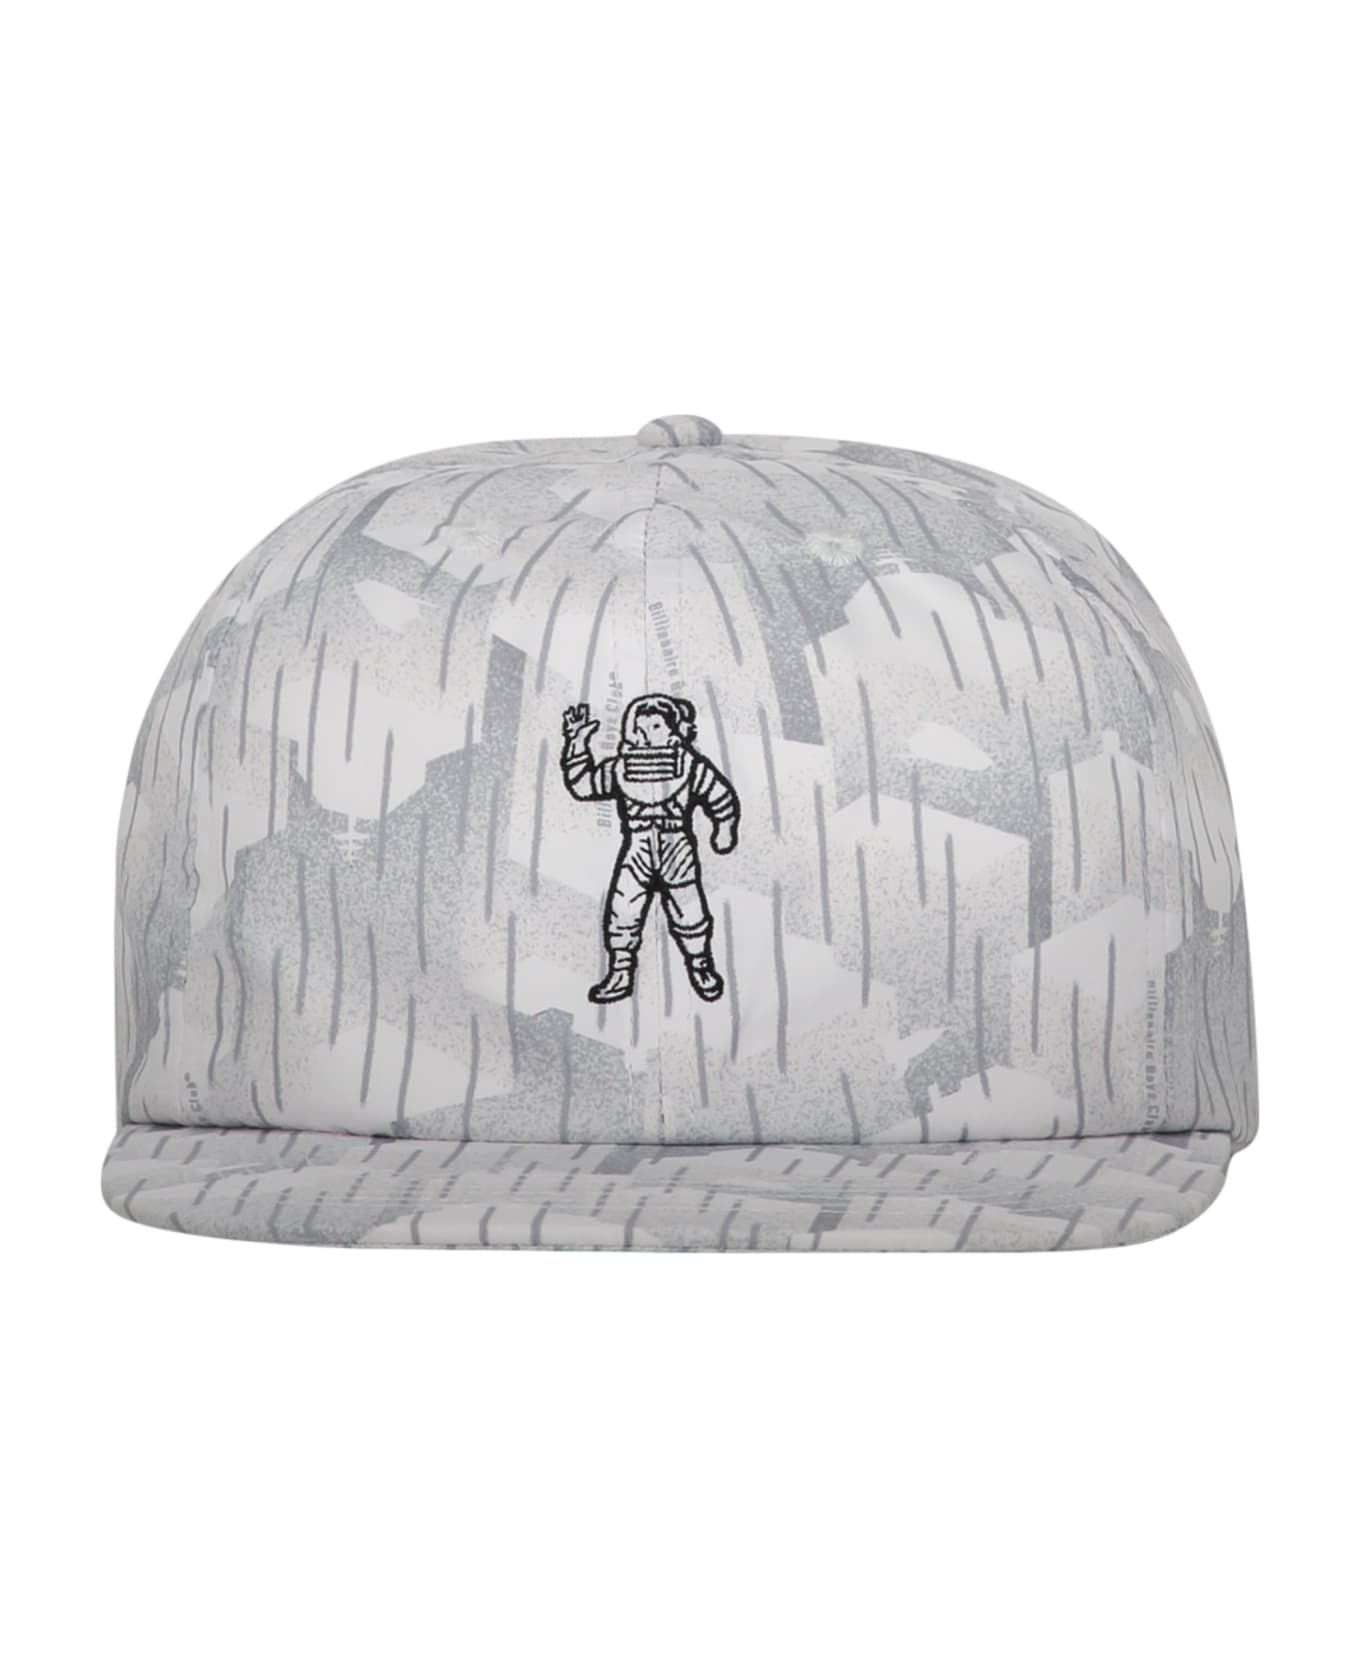 Billionaire Boys Club Baseball Hat With Flat Visor - grey